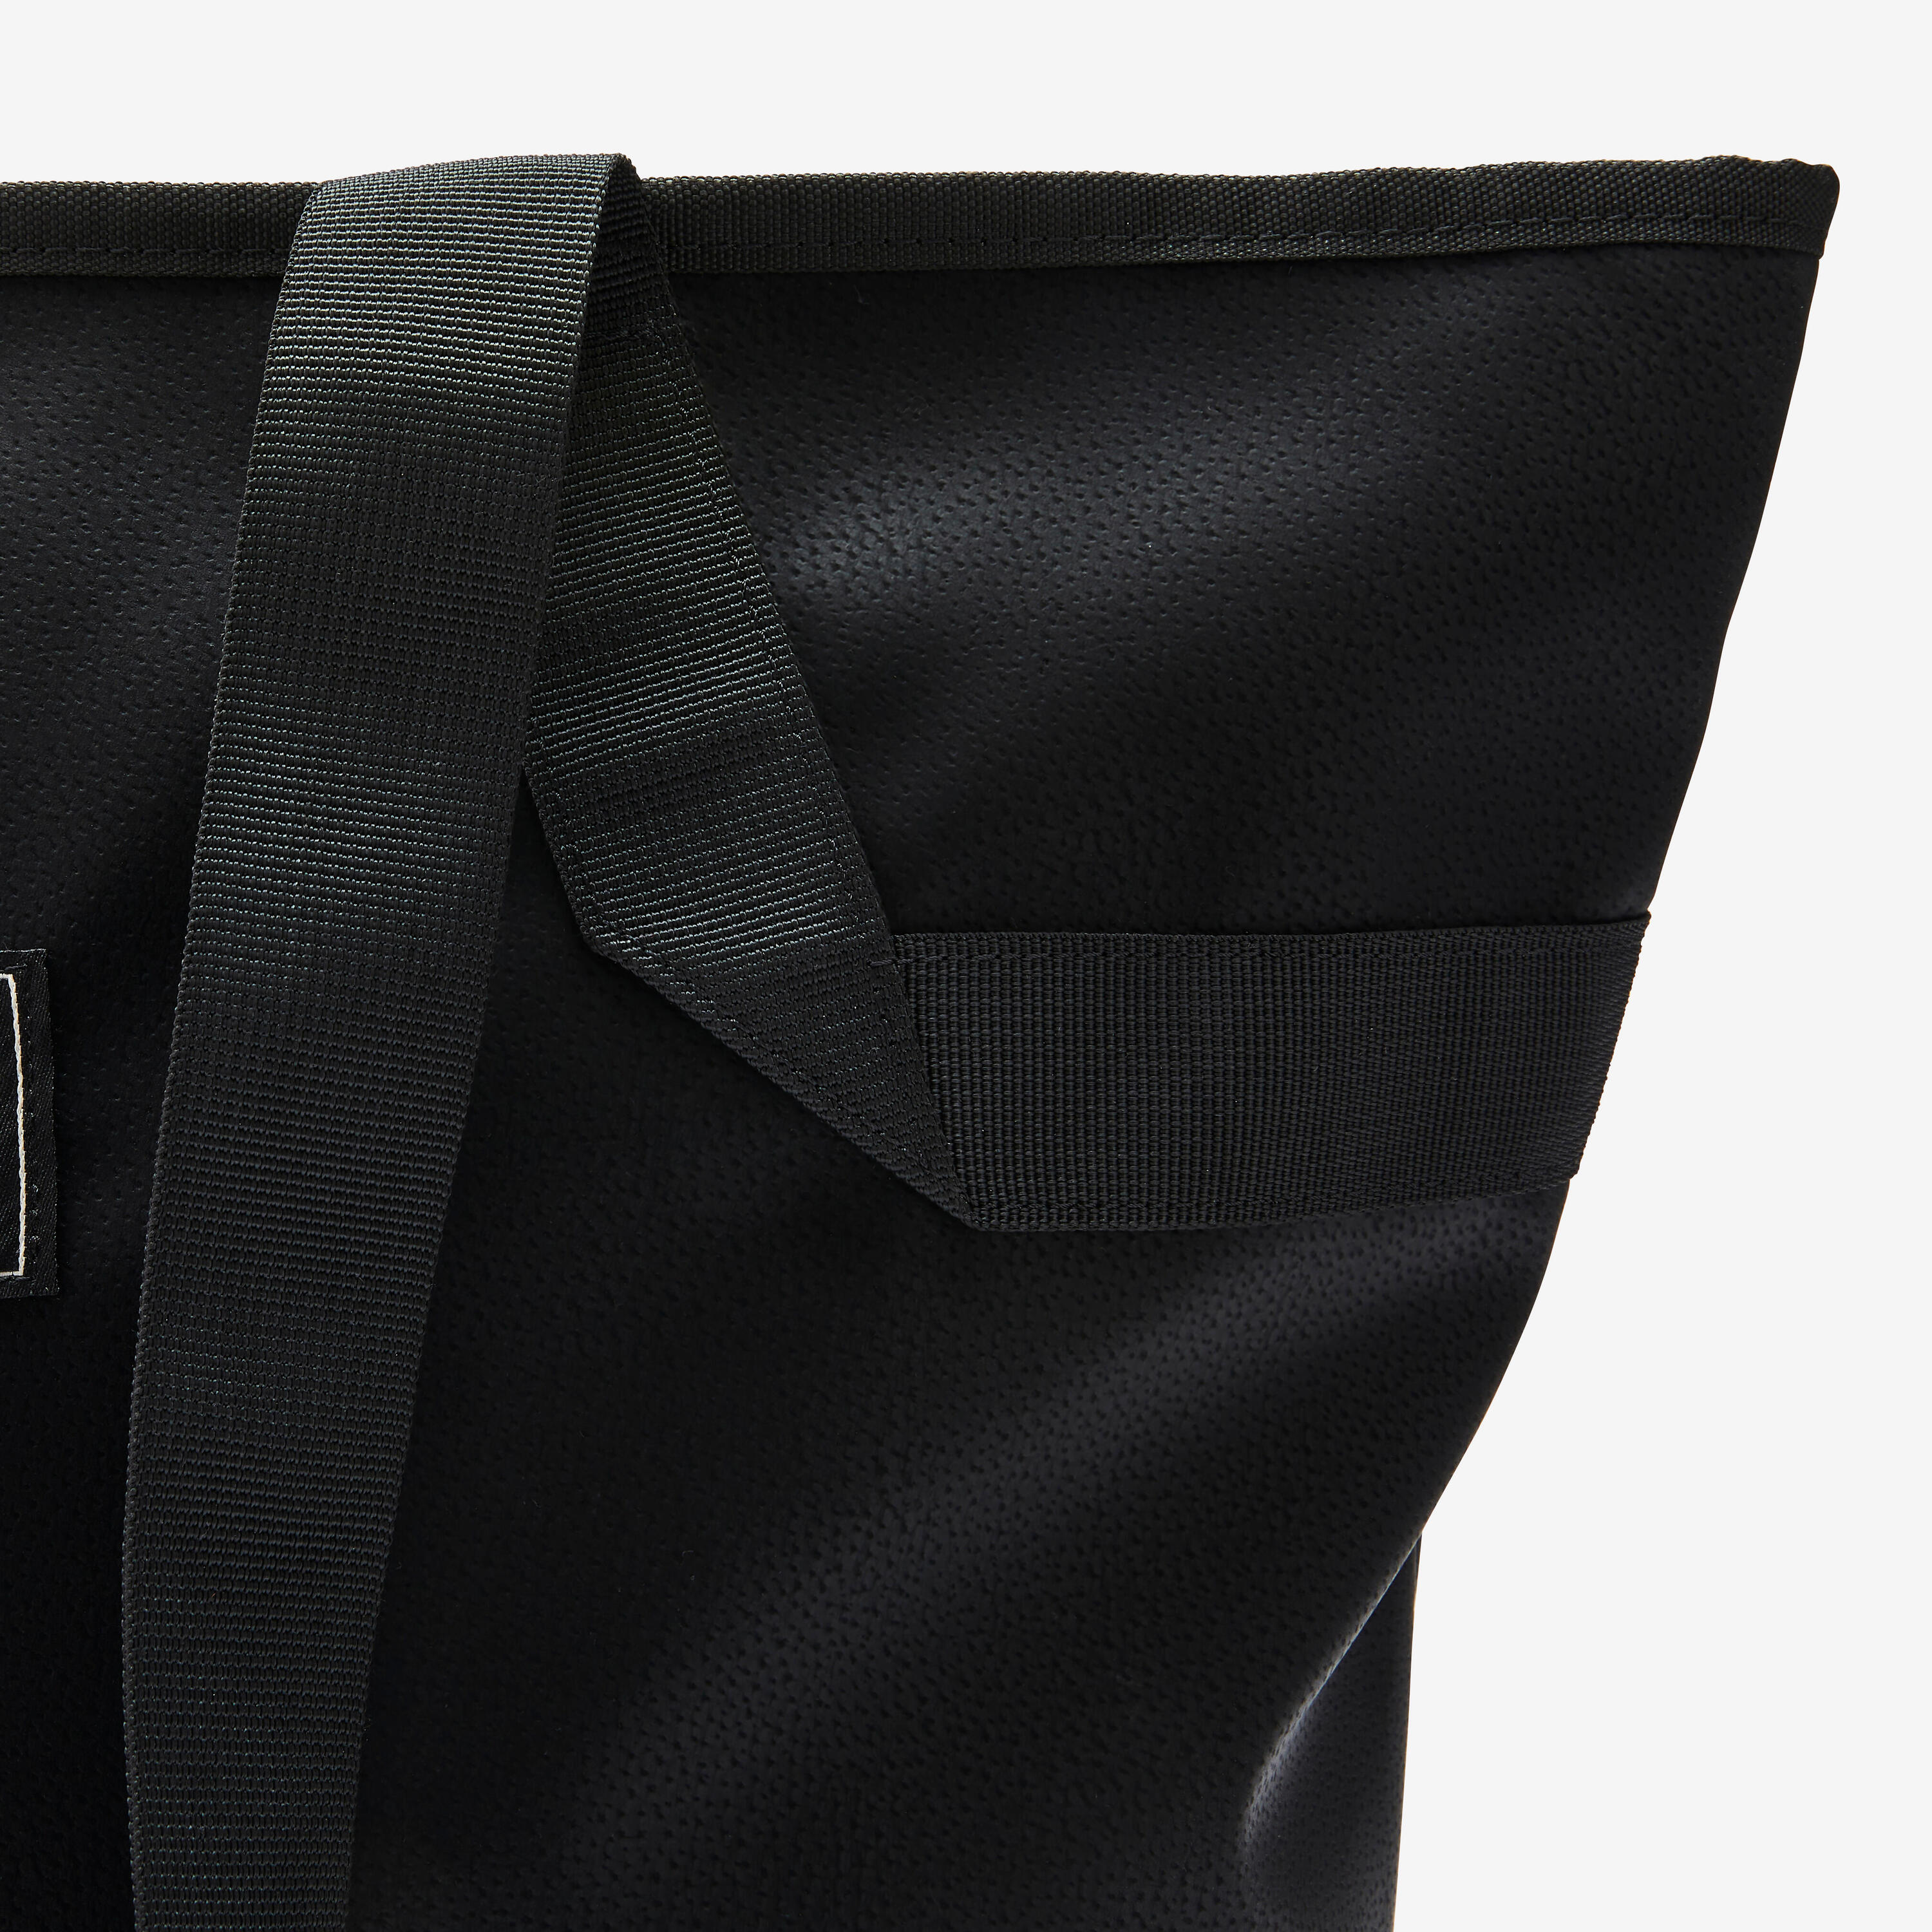 25 L Leather Look Sport Tote Bag - Black 3/6